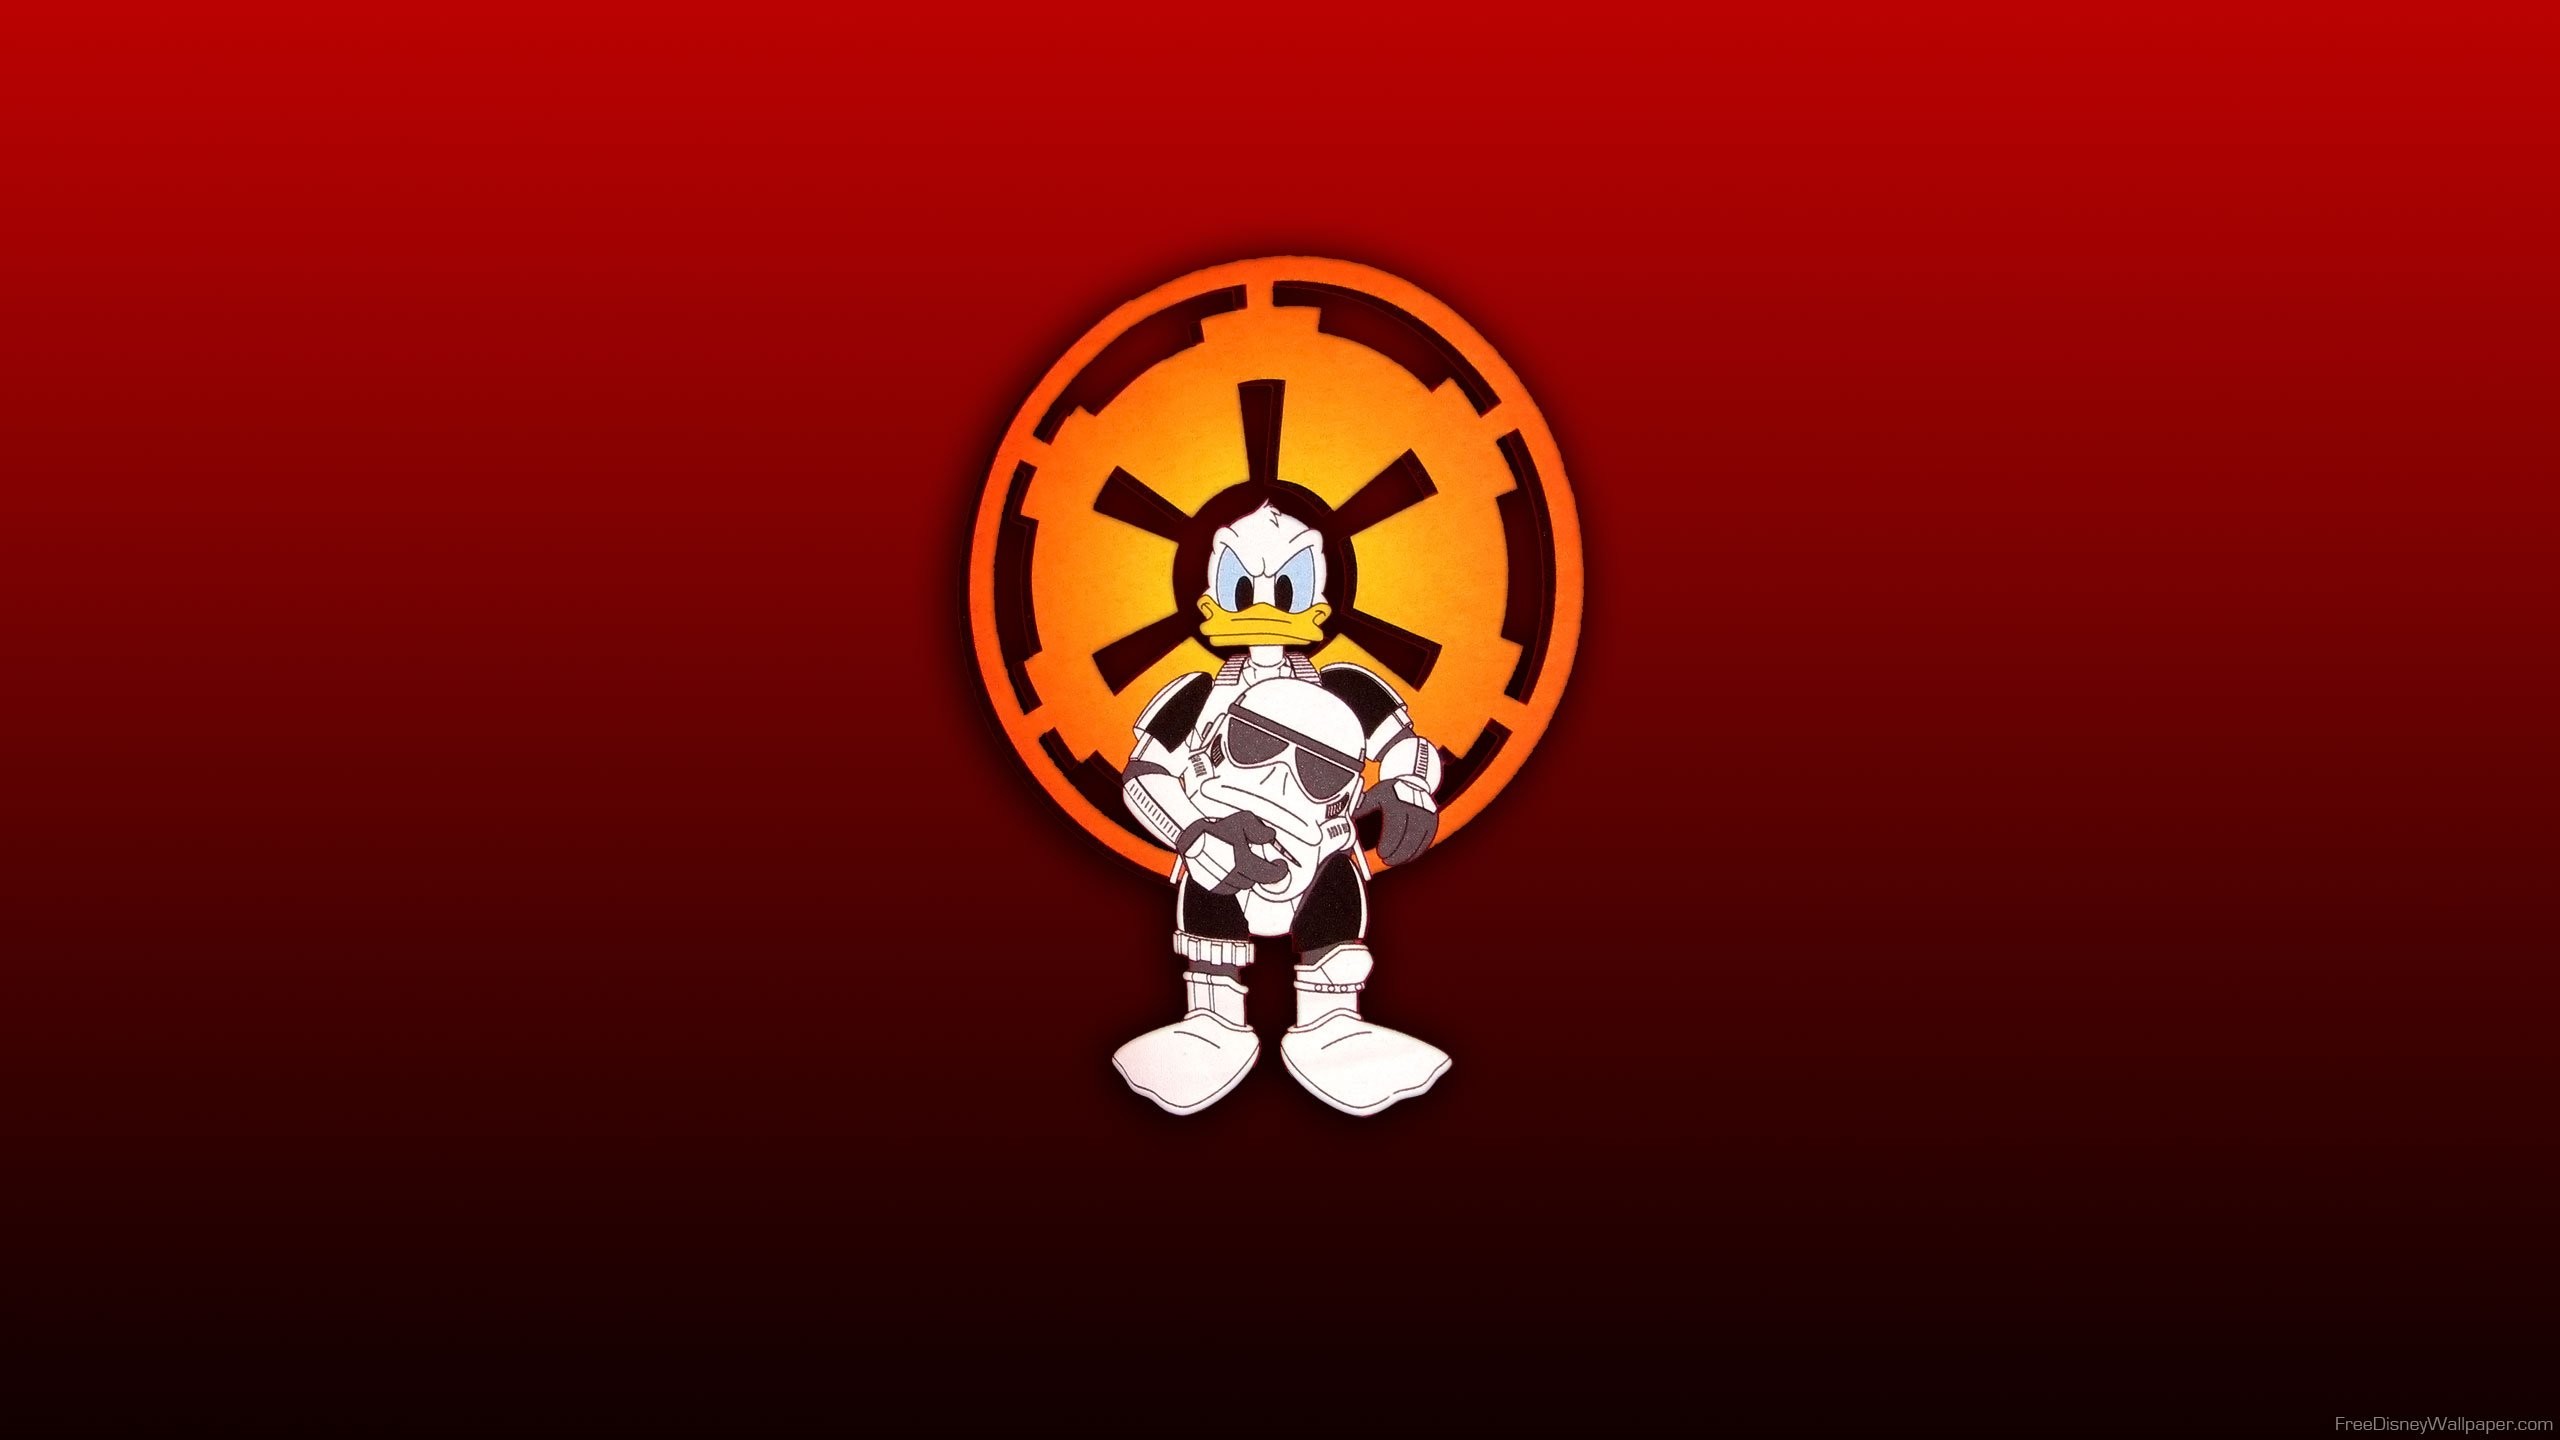 Star Wars Imperial Logo And Fleet Wall Sticker | Apex Stickers